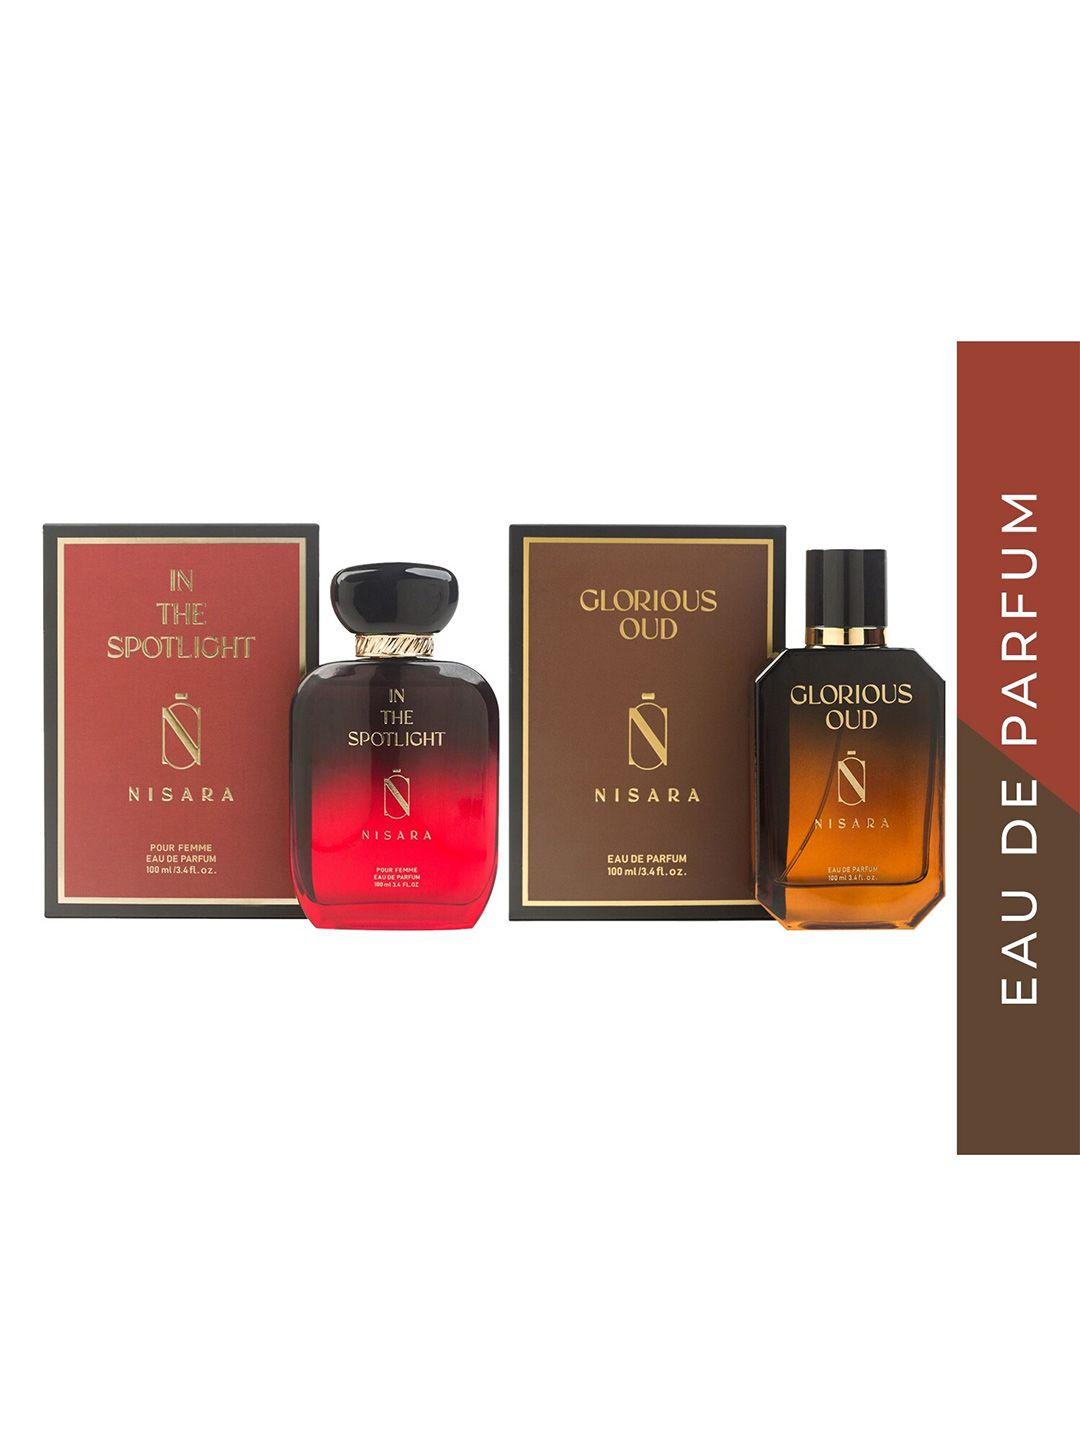 nisara set of 2 in the spotlight & glorious oud eau de parfum - 100ml each